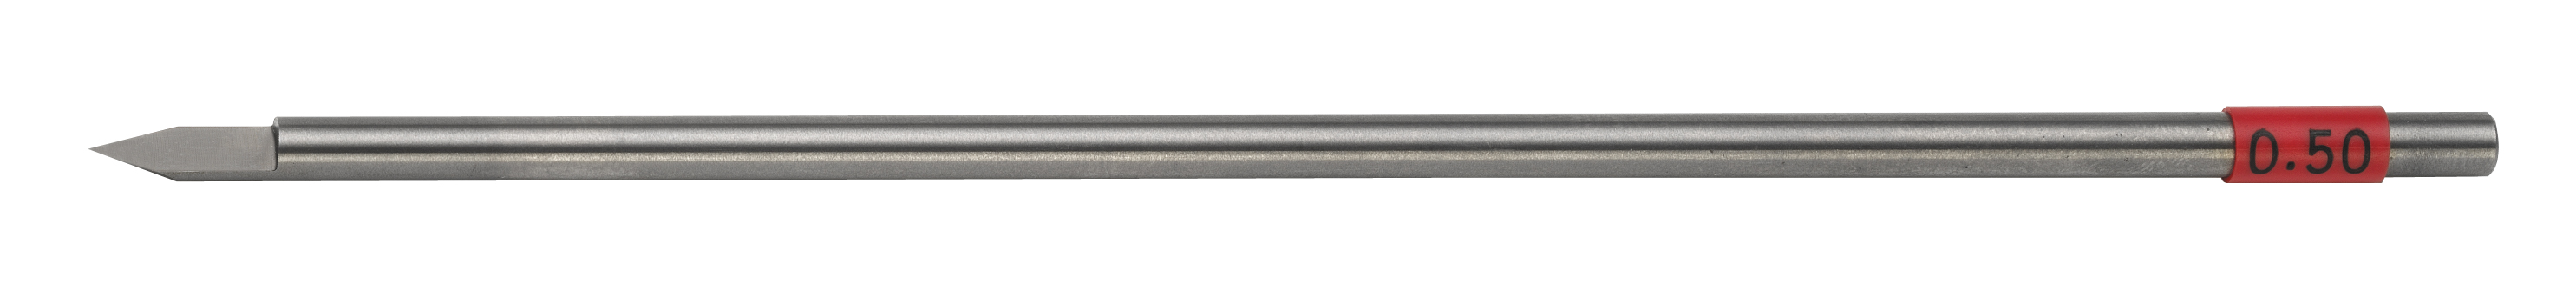 WS-Fräser Schaft-Ø 4,36 mm Breite 0,50 mm Gravograph